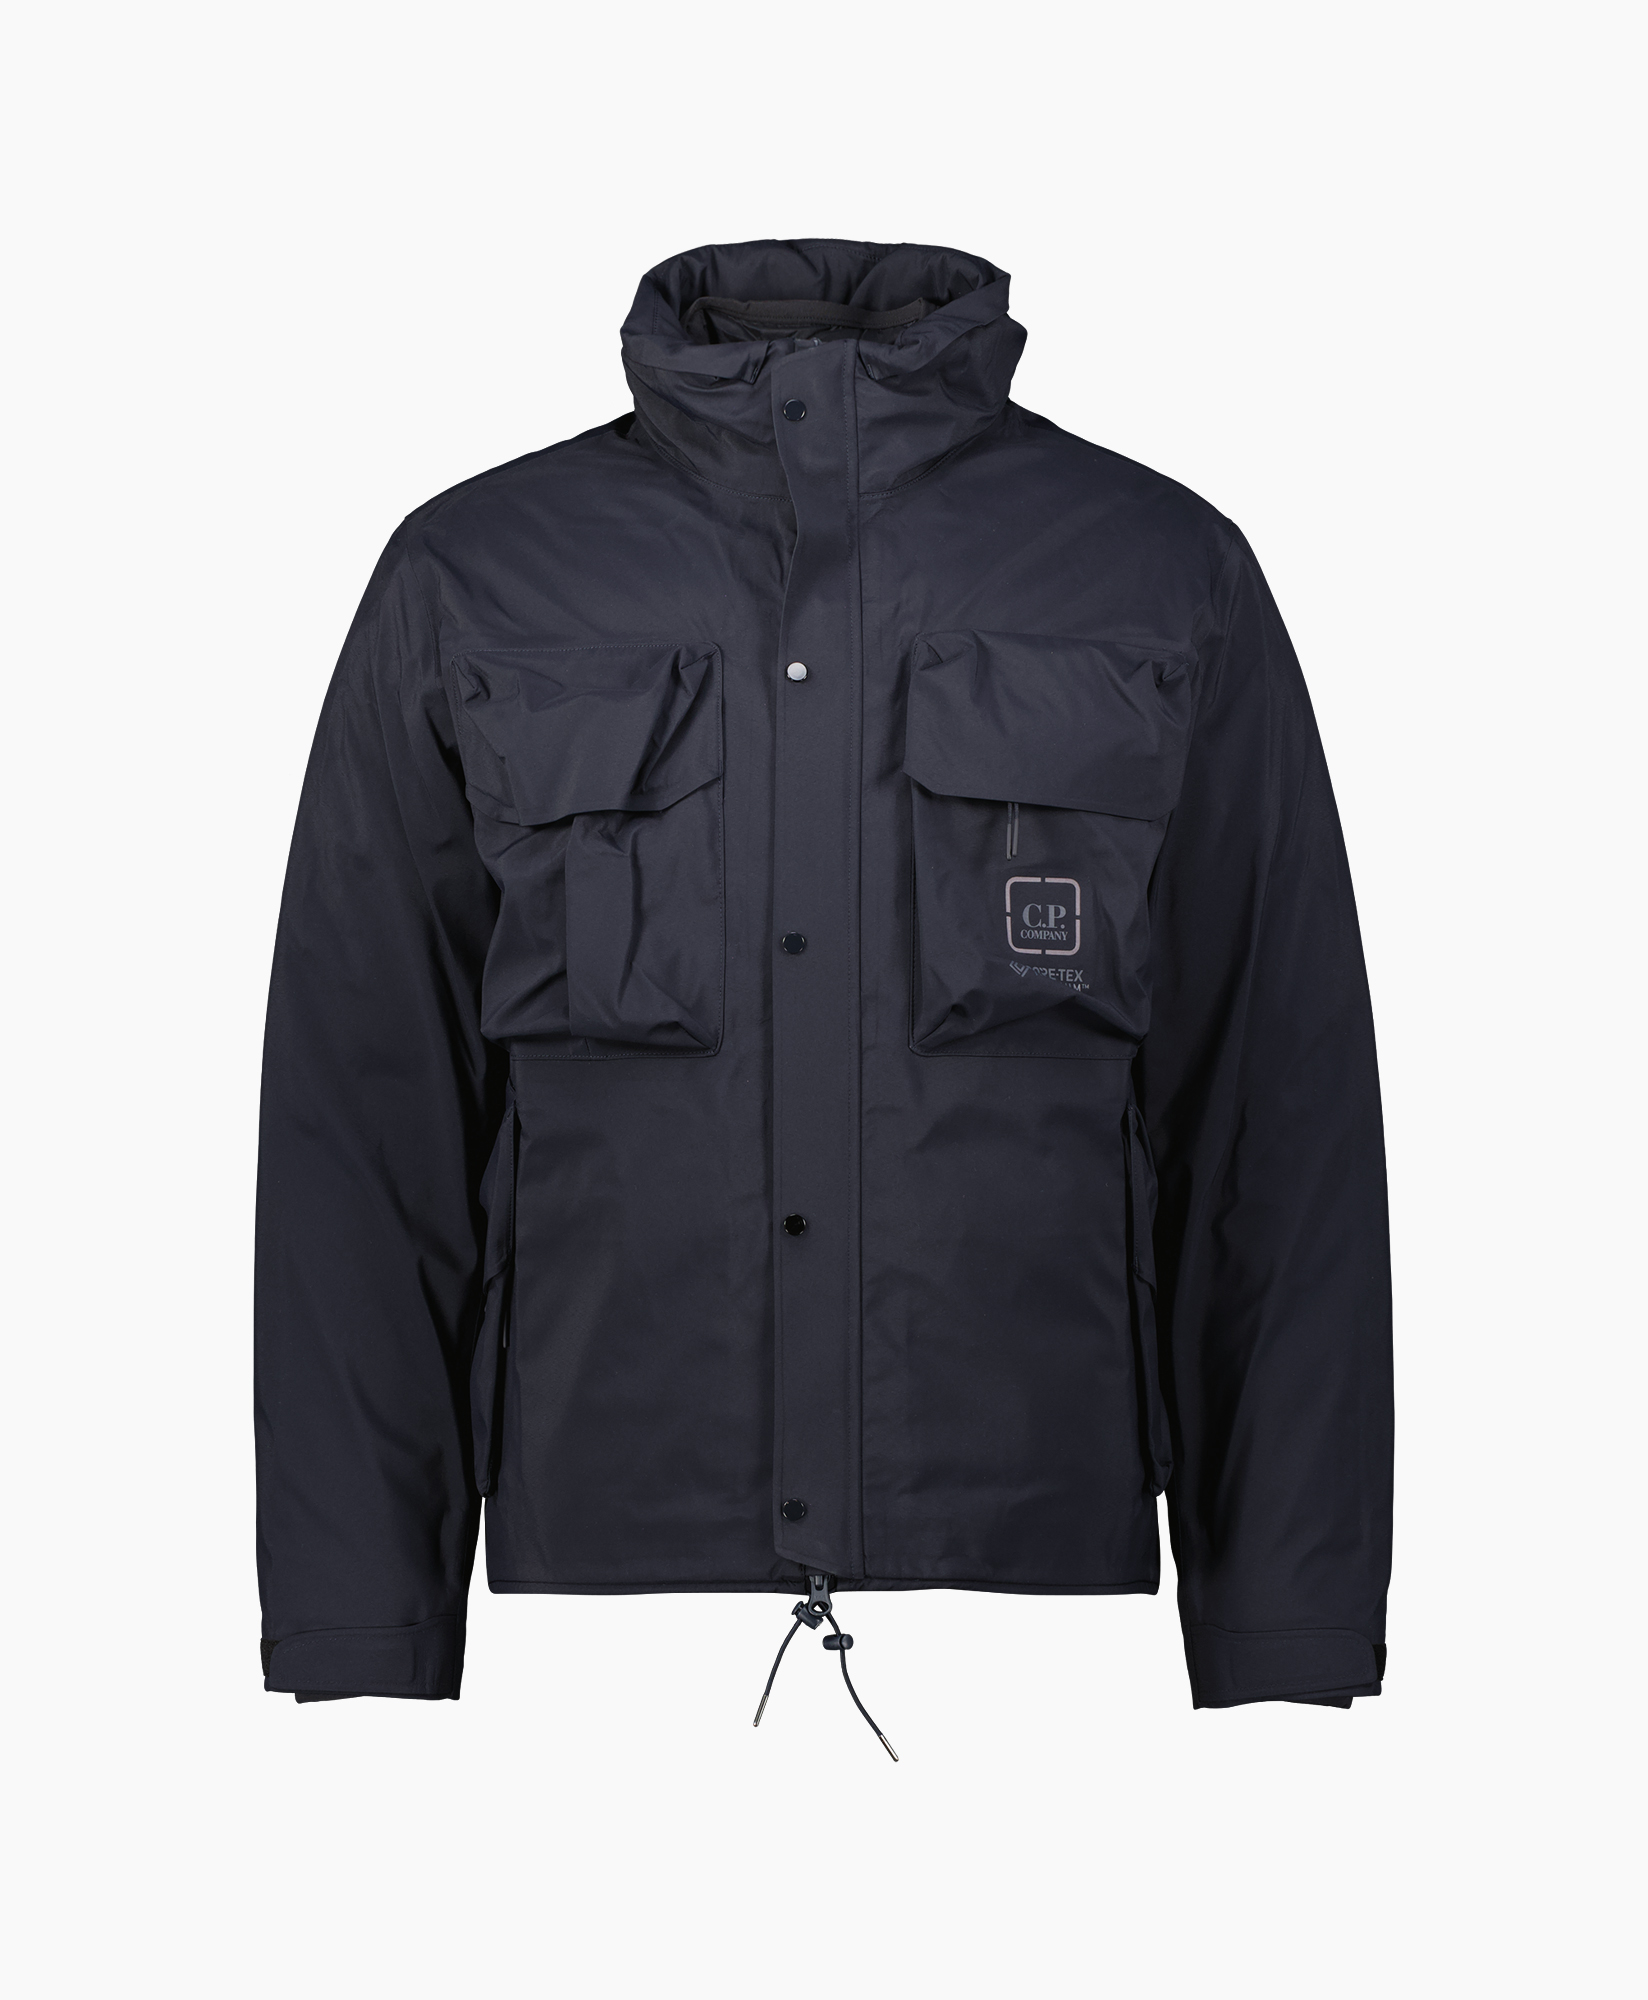 Cp Company Jack Outerwear - Medium Jacket Blauw